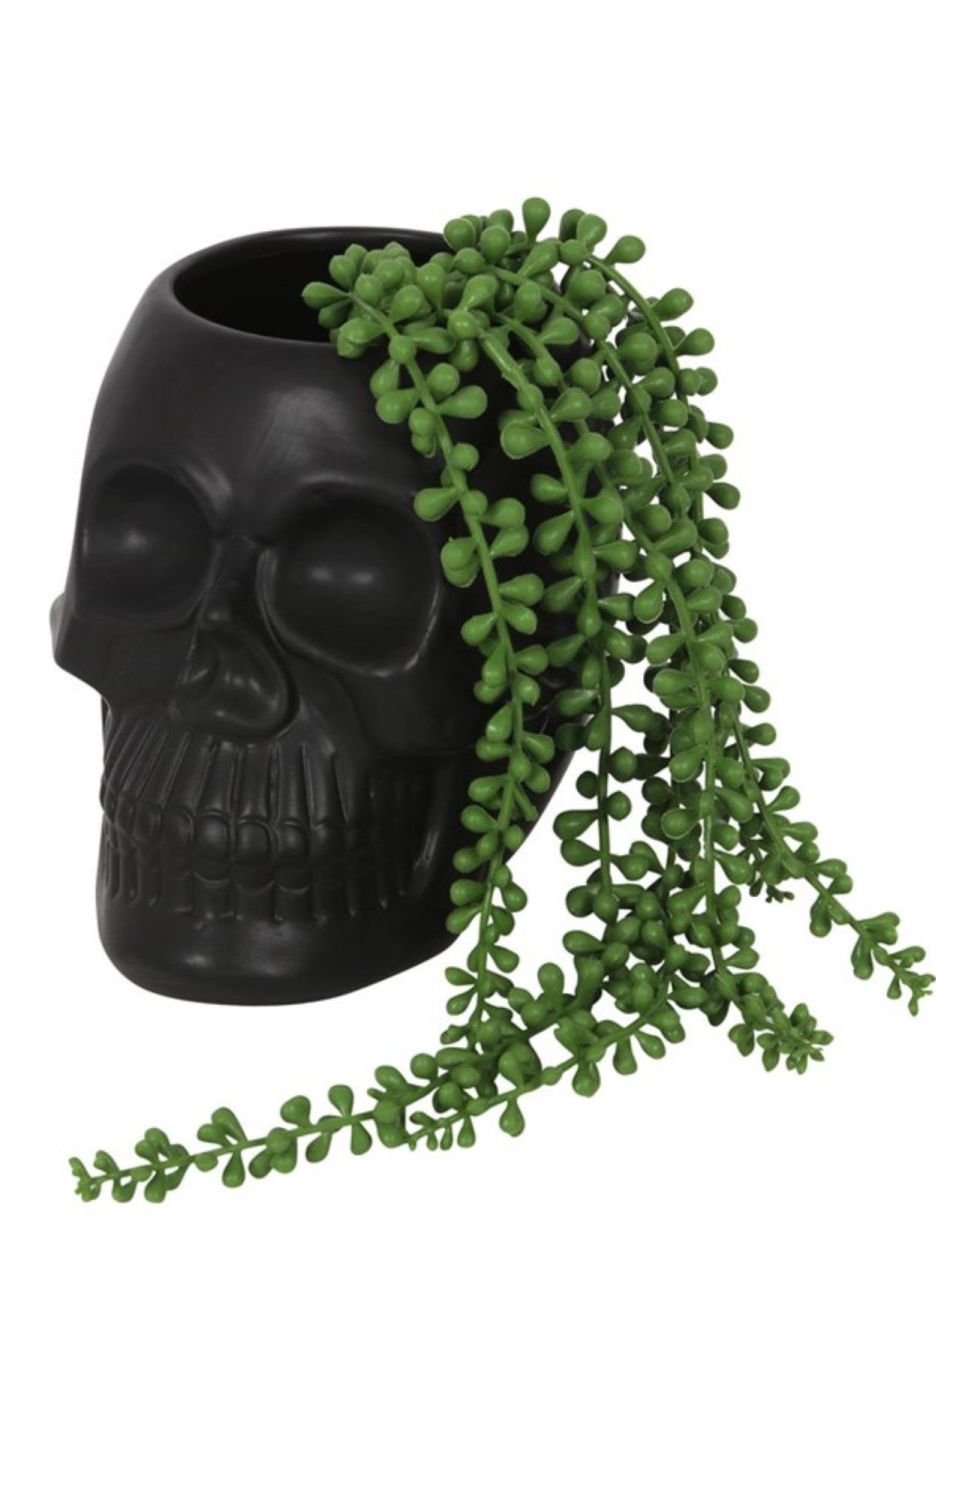 Skull plant pot RRP £24.99